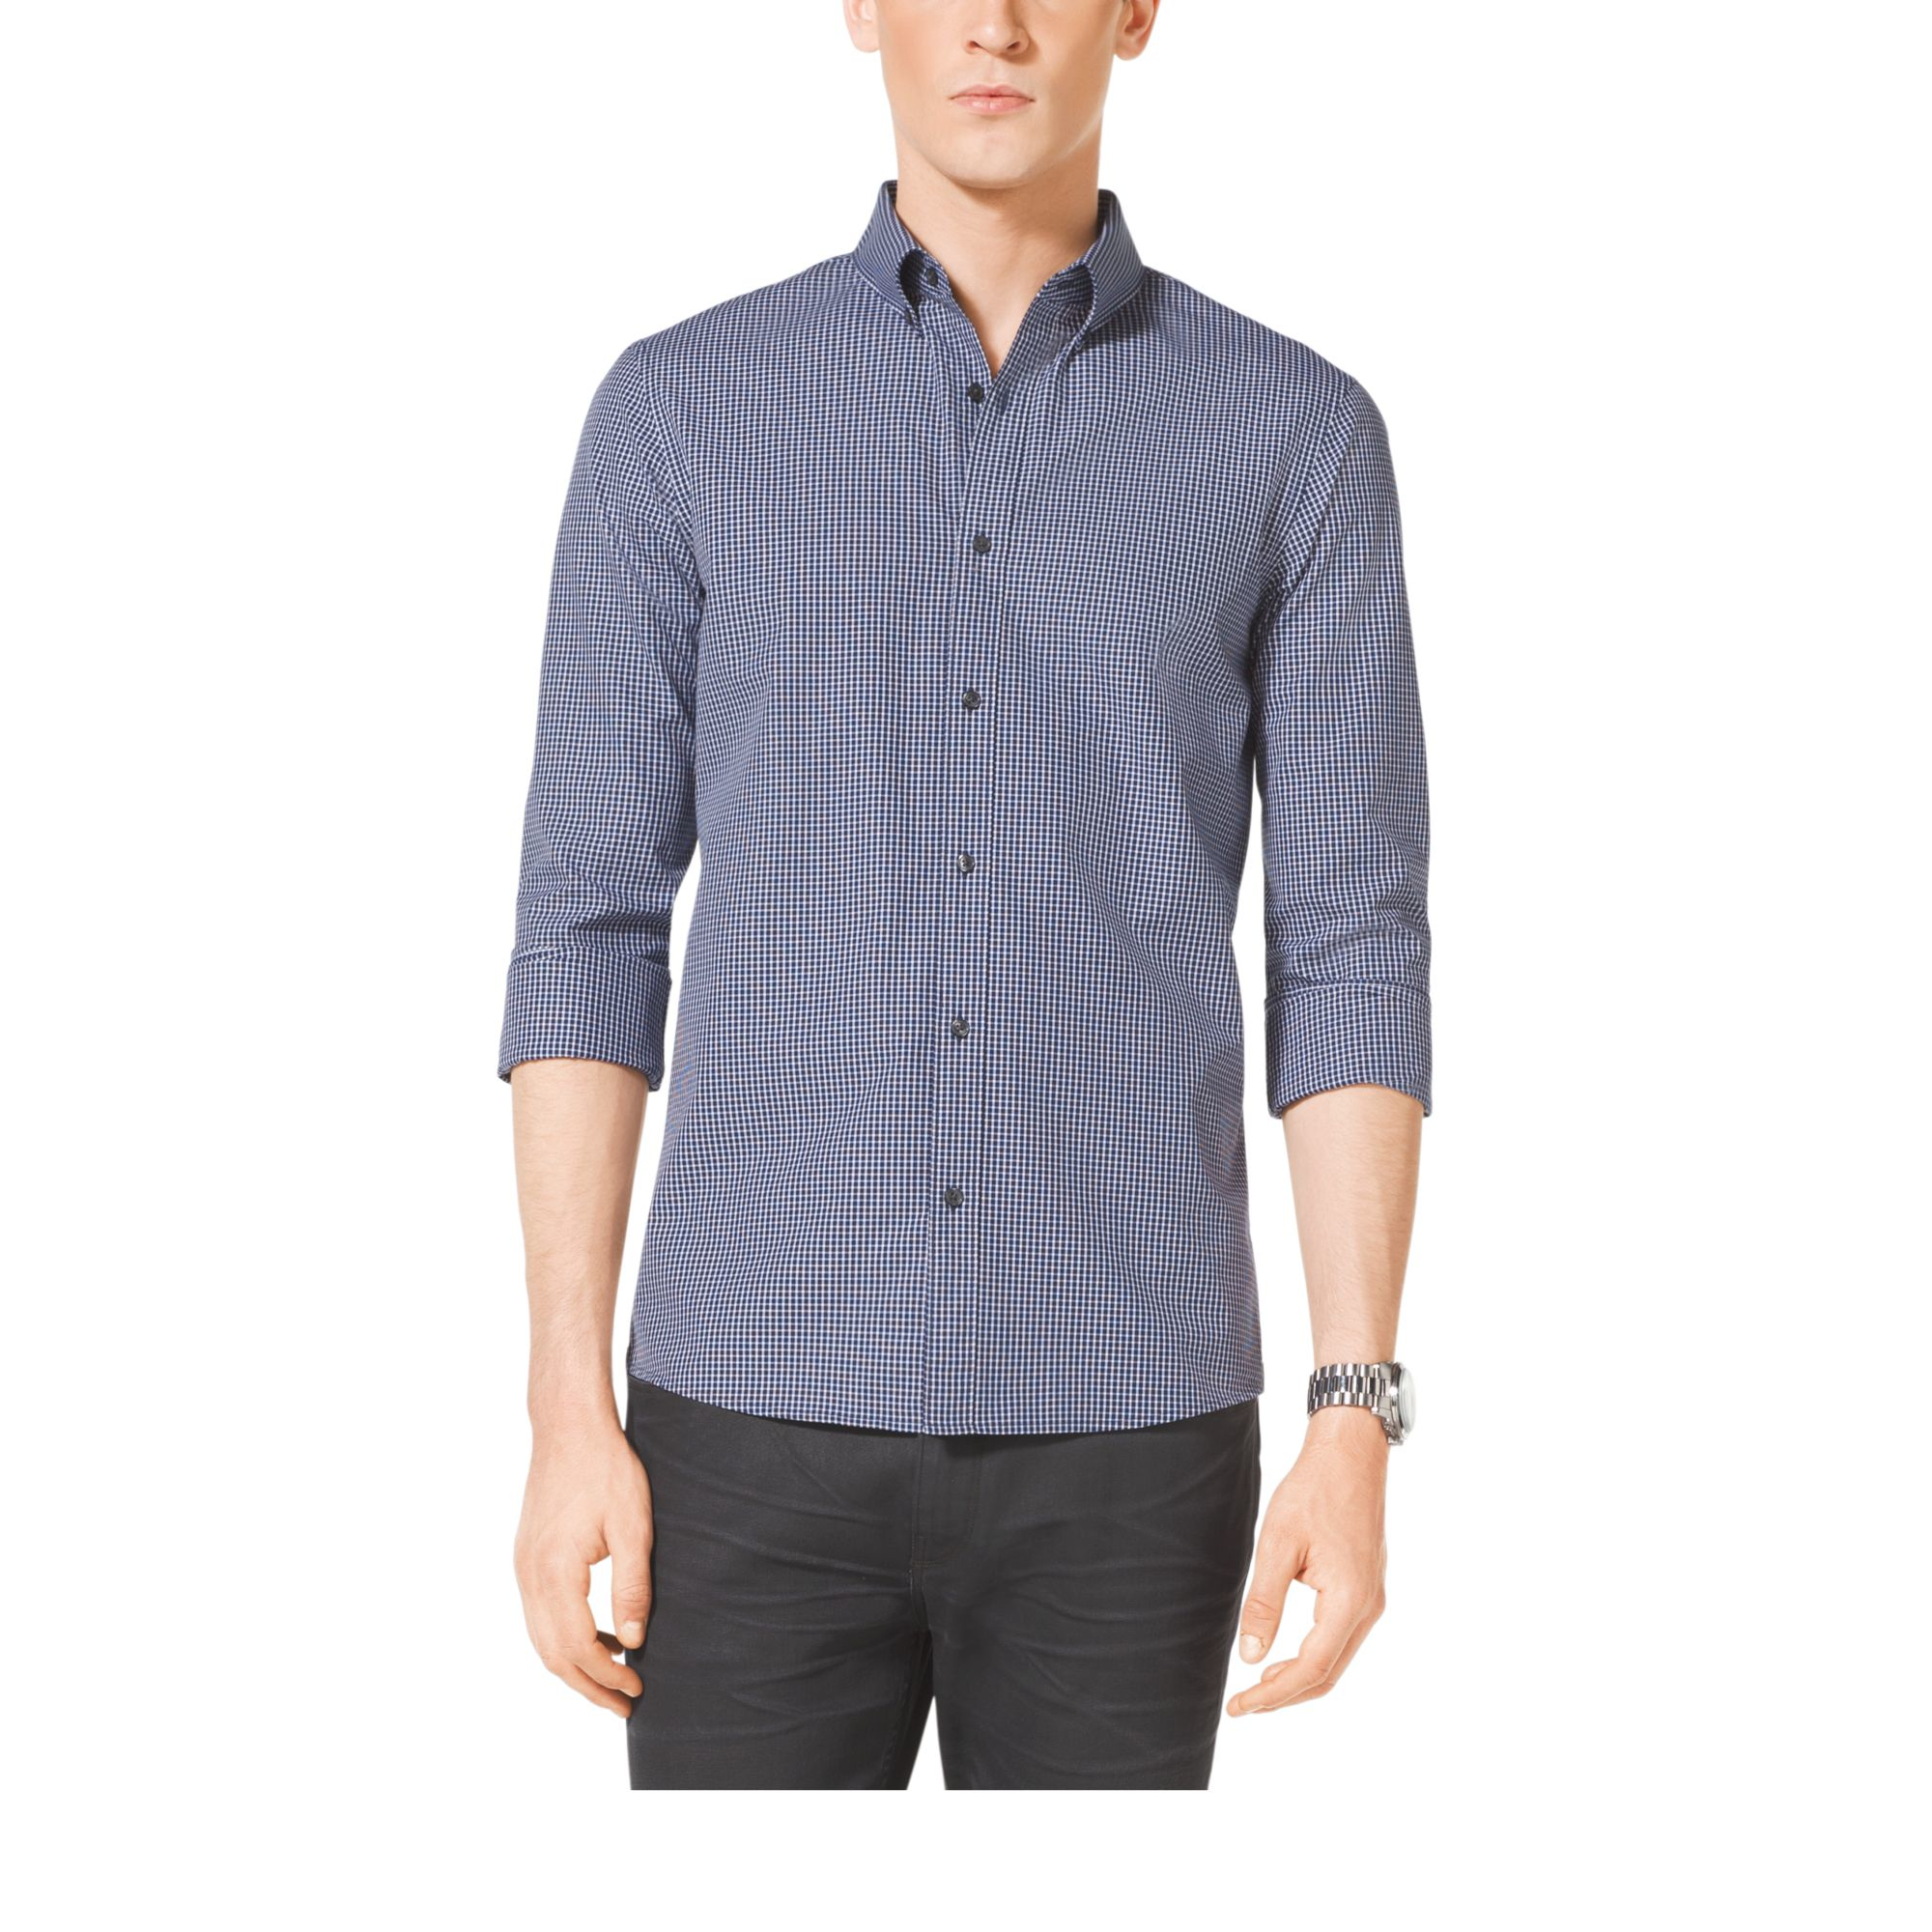 Lyst - Michael Kors Slim-fit Cotton Shirt in Blue for Men